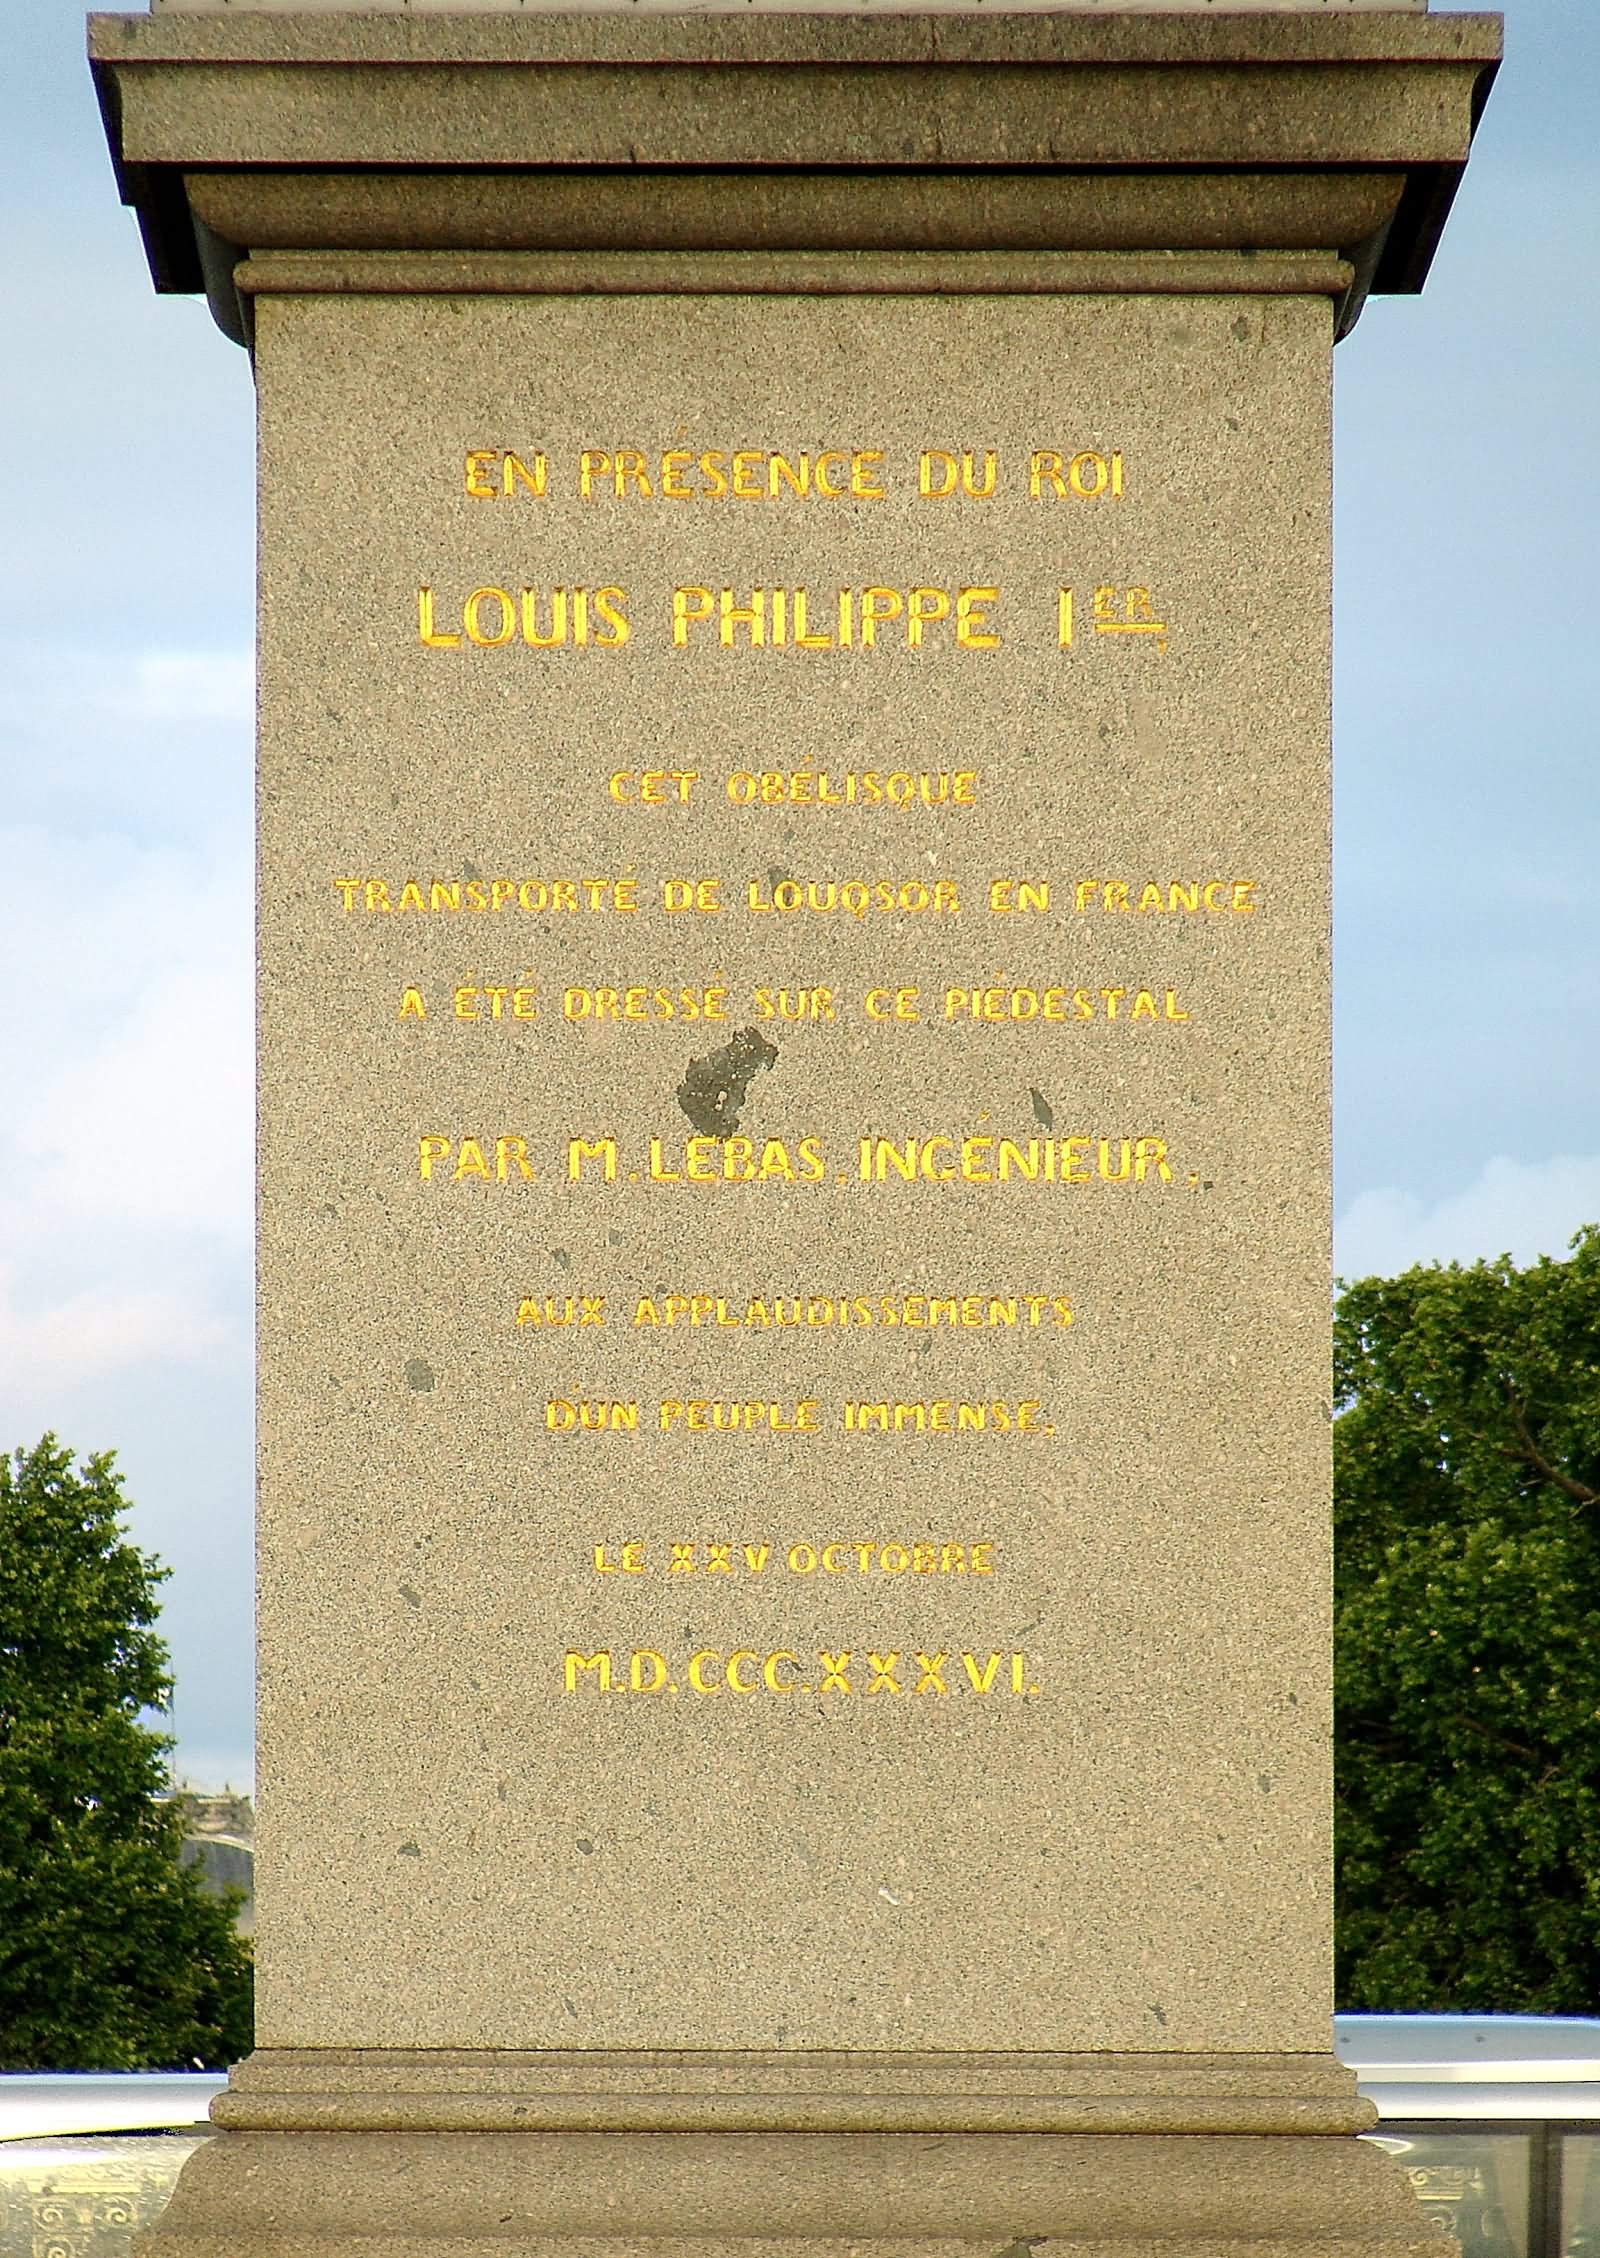 Pedestal Obelisk Place de la Concorde